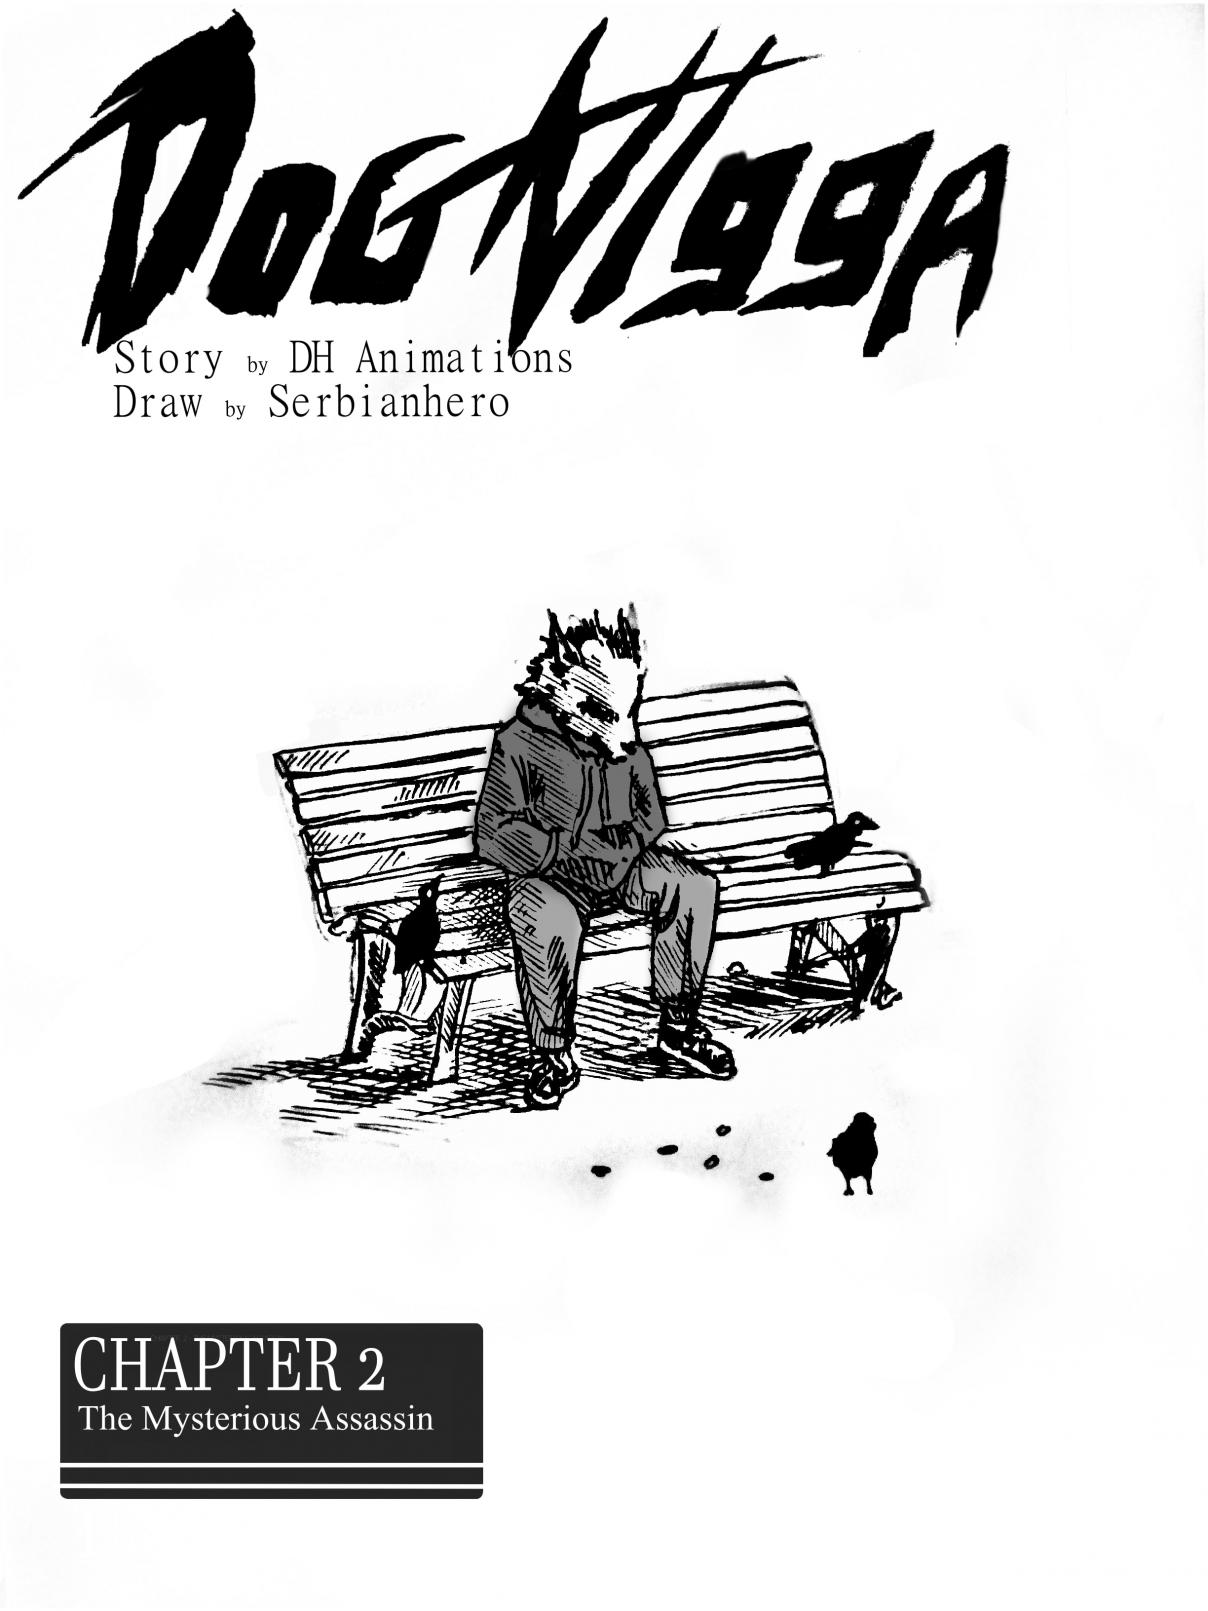 Dog Nigga Vol. 1 Ch. 2 Mysterious assassin